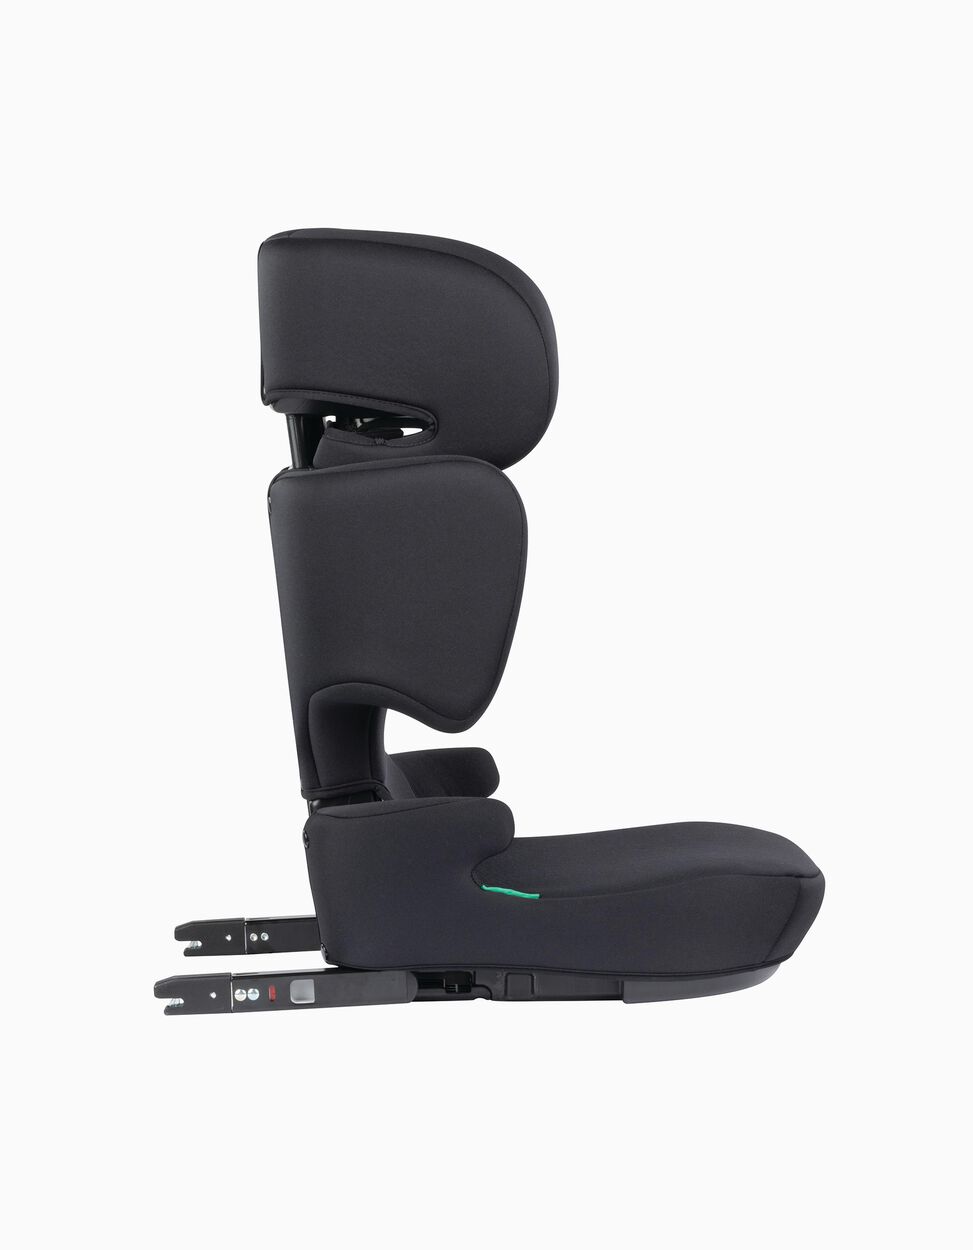 Bebe Confort Cadeira Auto Rock - Essential Black